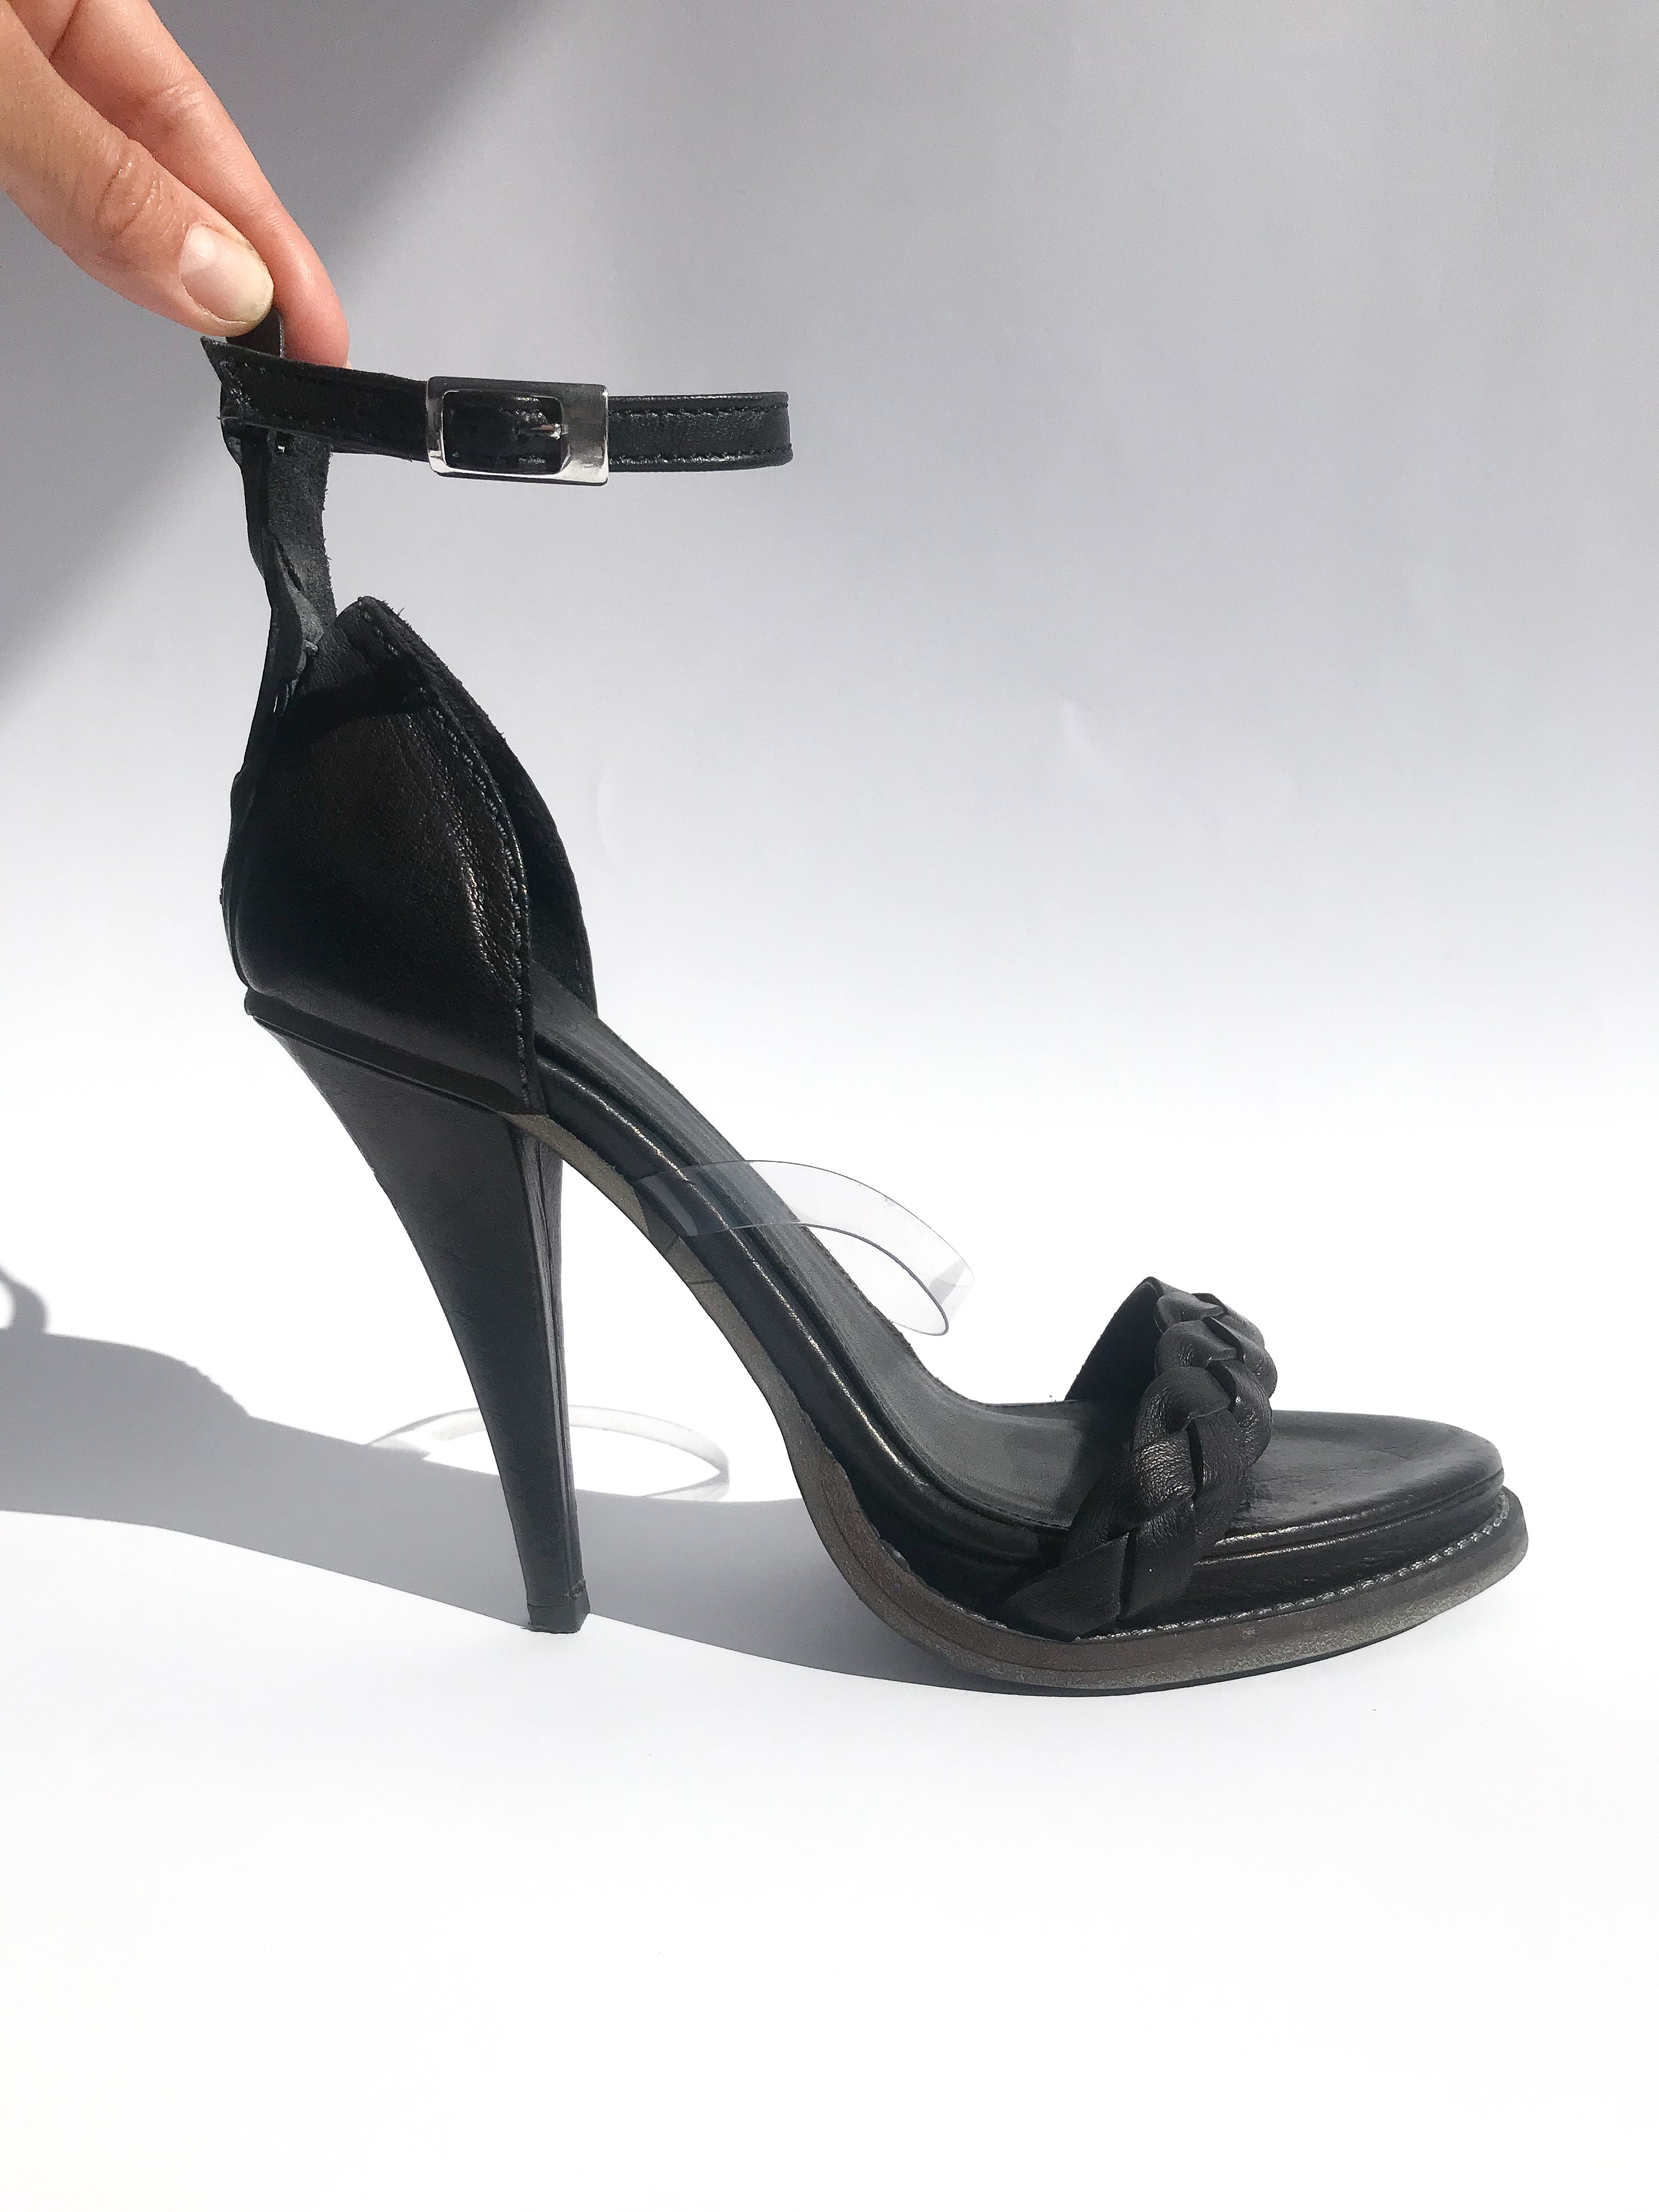 Acne Studios Brown Braided Leather Platform Heels, EU 38, US 5